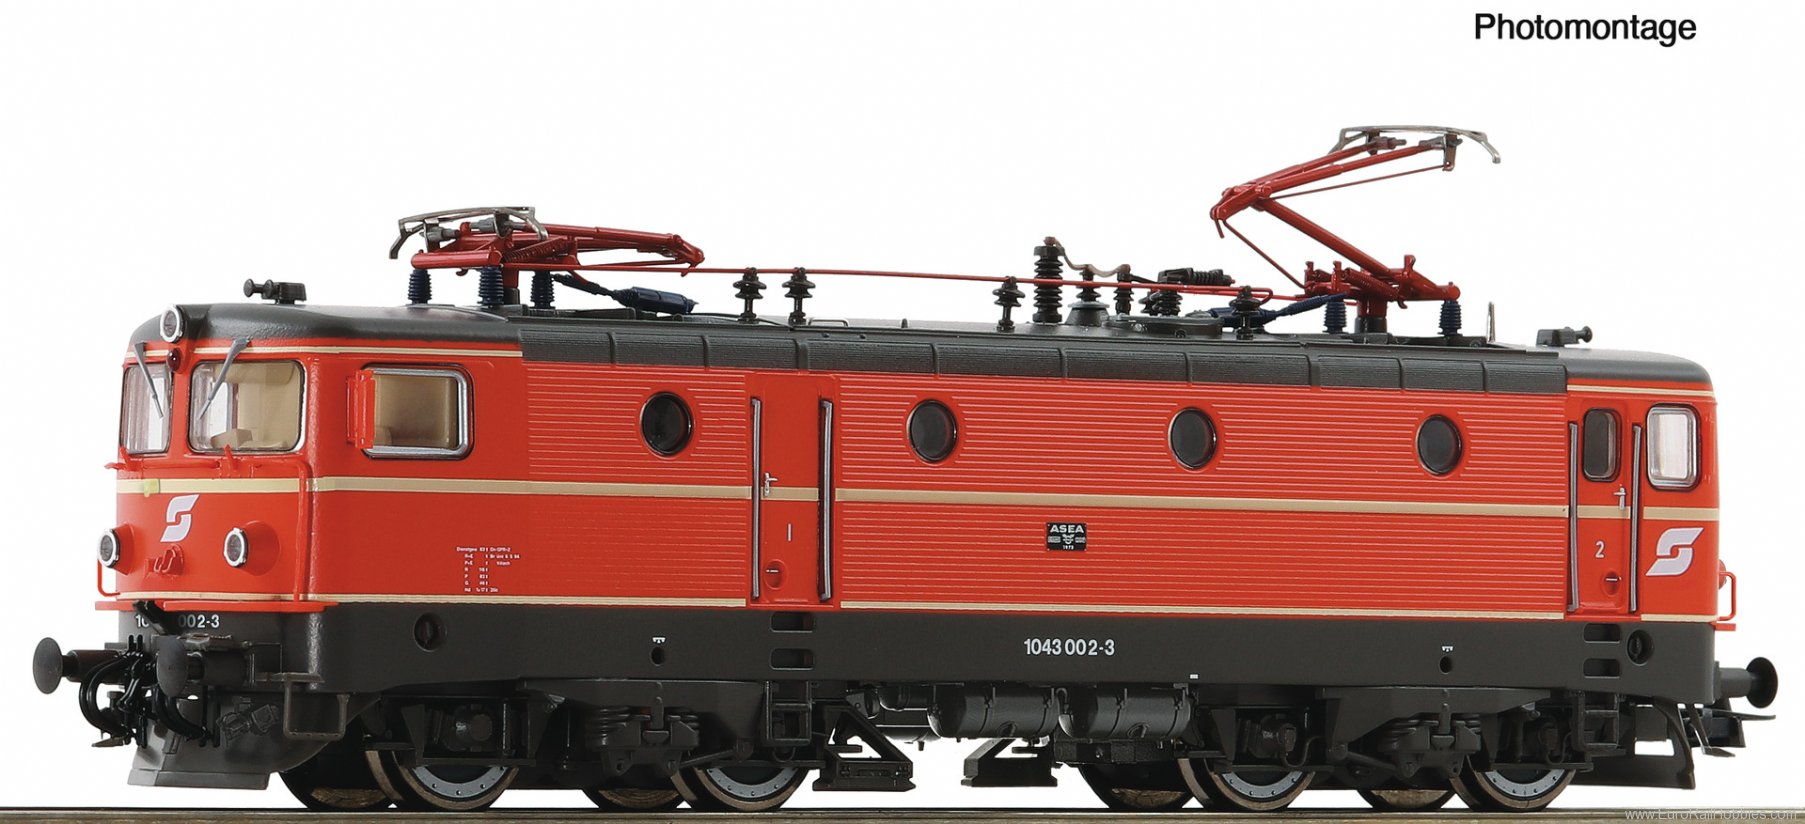 Roco 7500072 Electric locomotive 1043 002-3, ÃBB (DC An